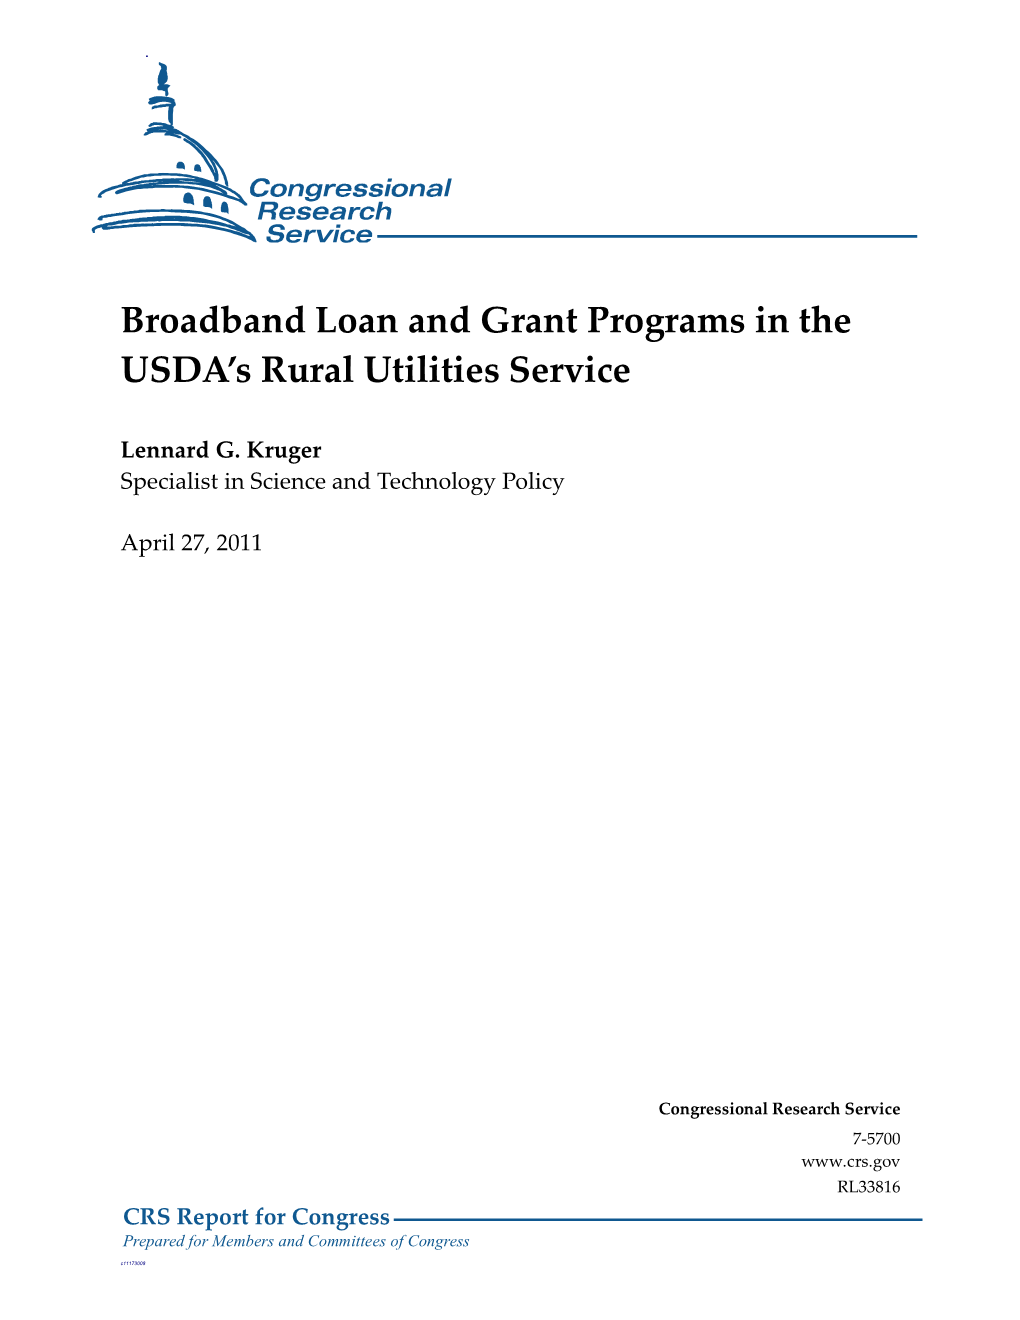 Broadband Loan and Grant Programs in the USDA's